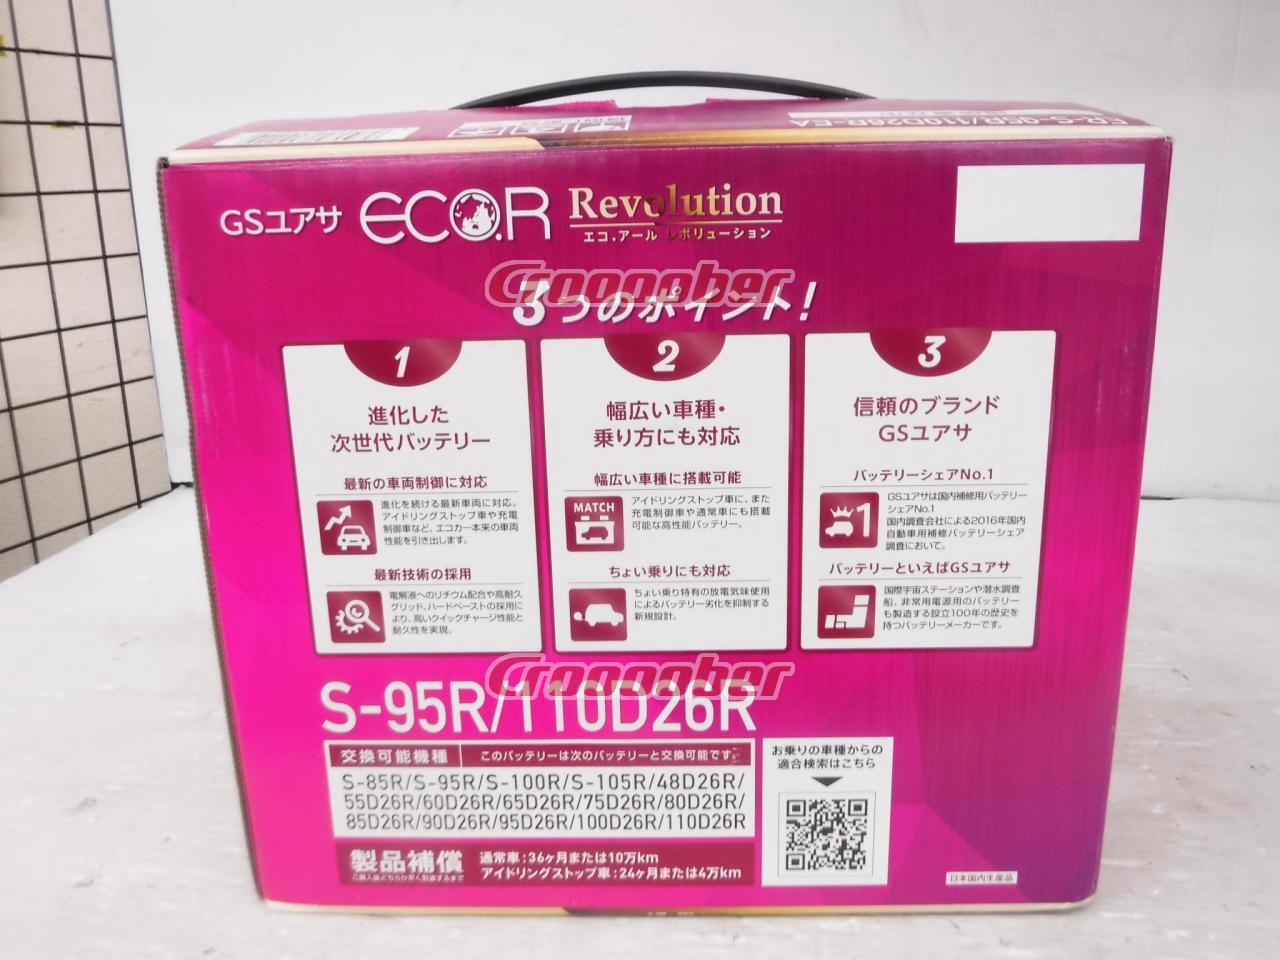 GS Yuasa Eco.R Revolution S-95R / 110D26R | Batteries | Croooober